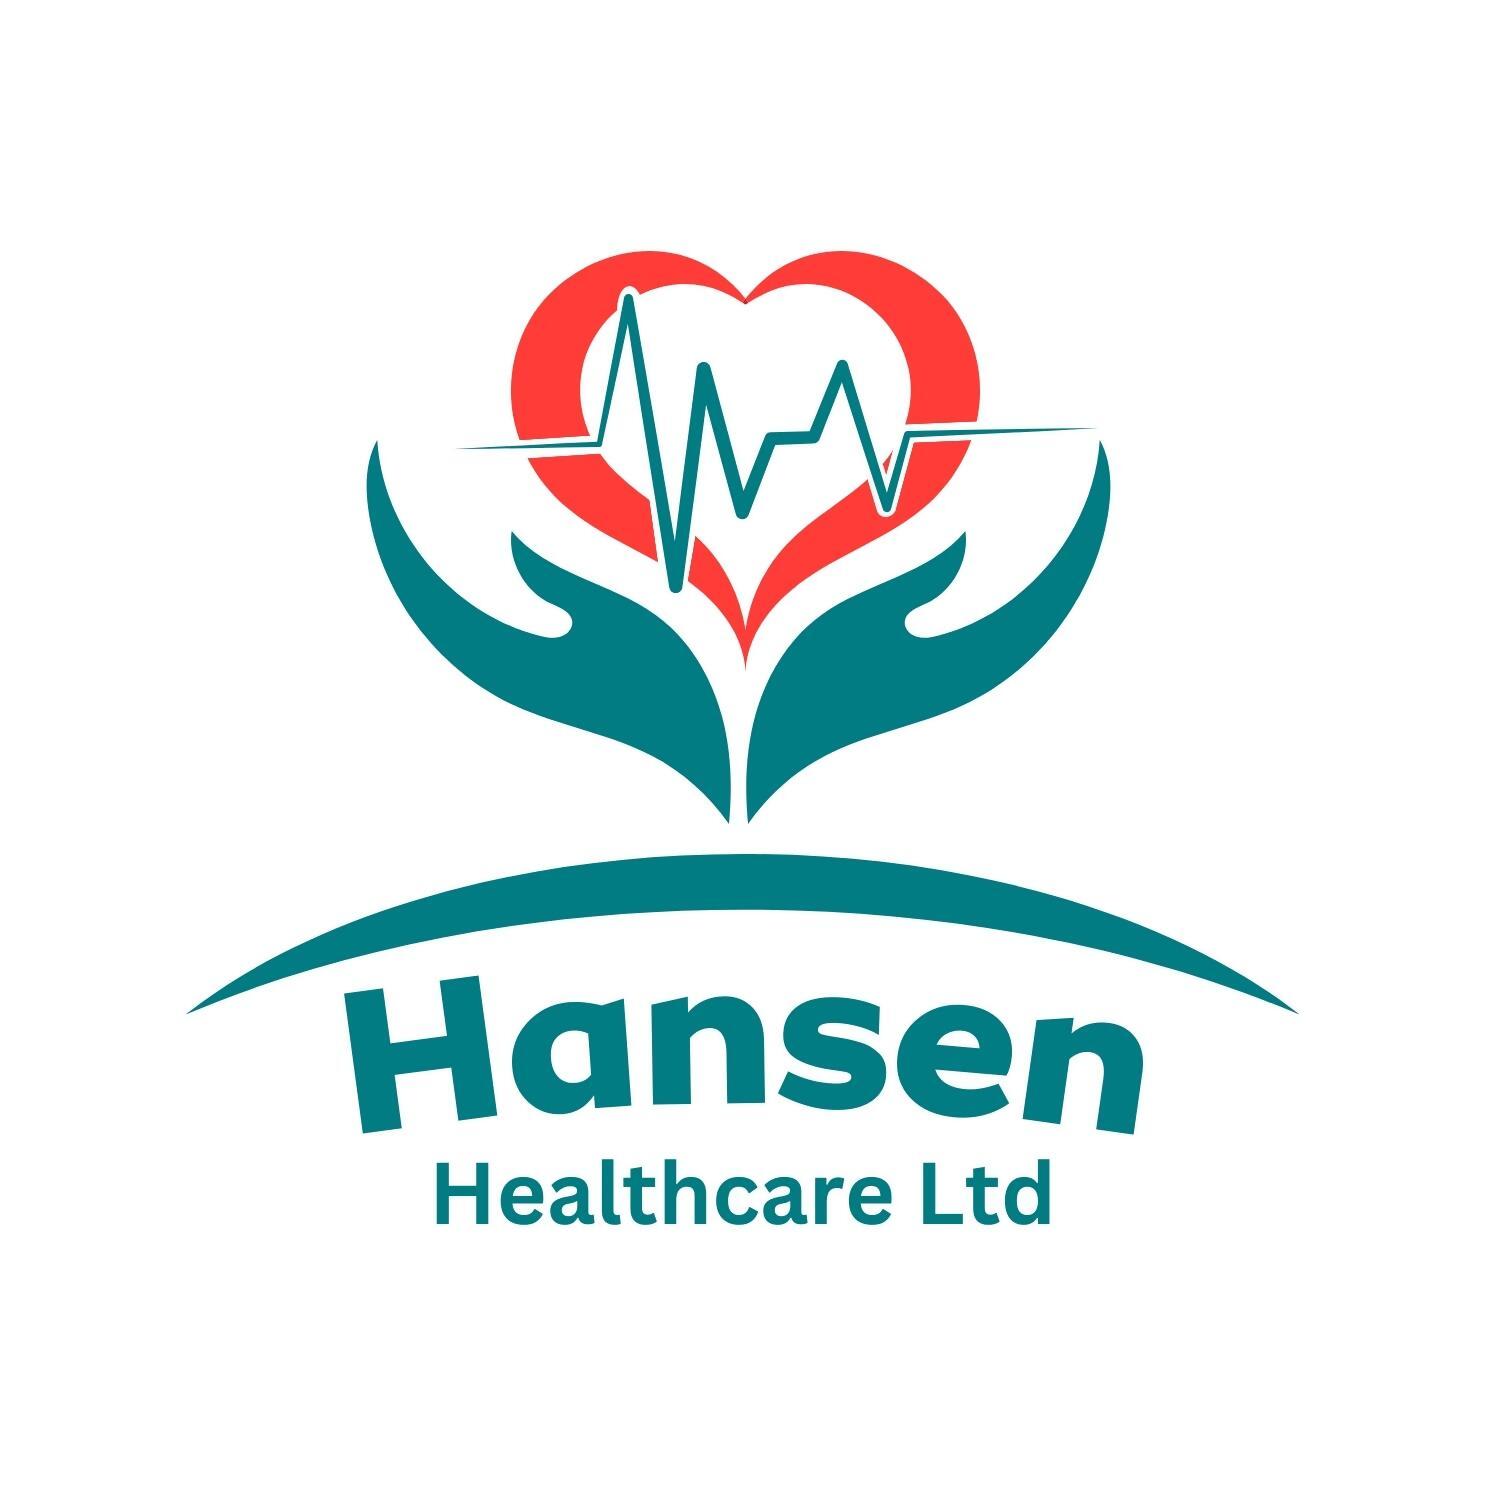 Hansen Healthcare Ltd Logo